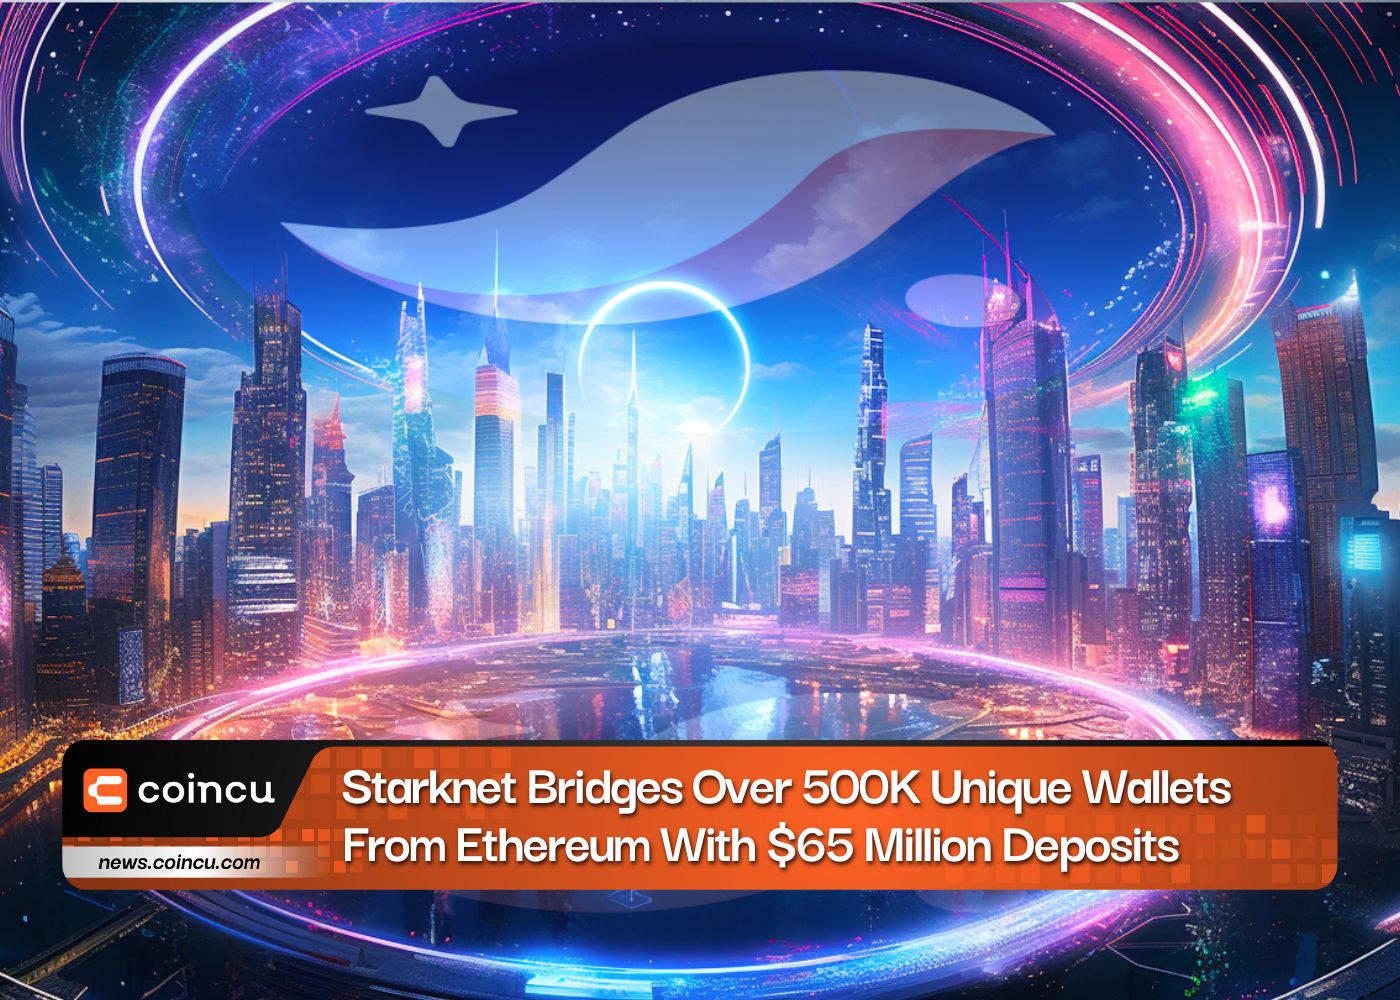 Starknet Bridges Over 500K Unique Wallets From Ethereum With $65 Million Deposits